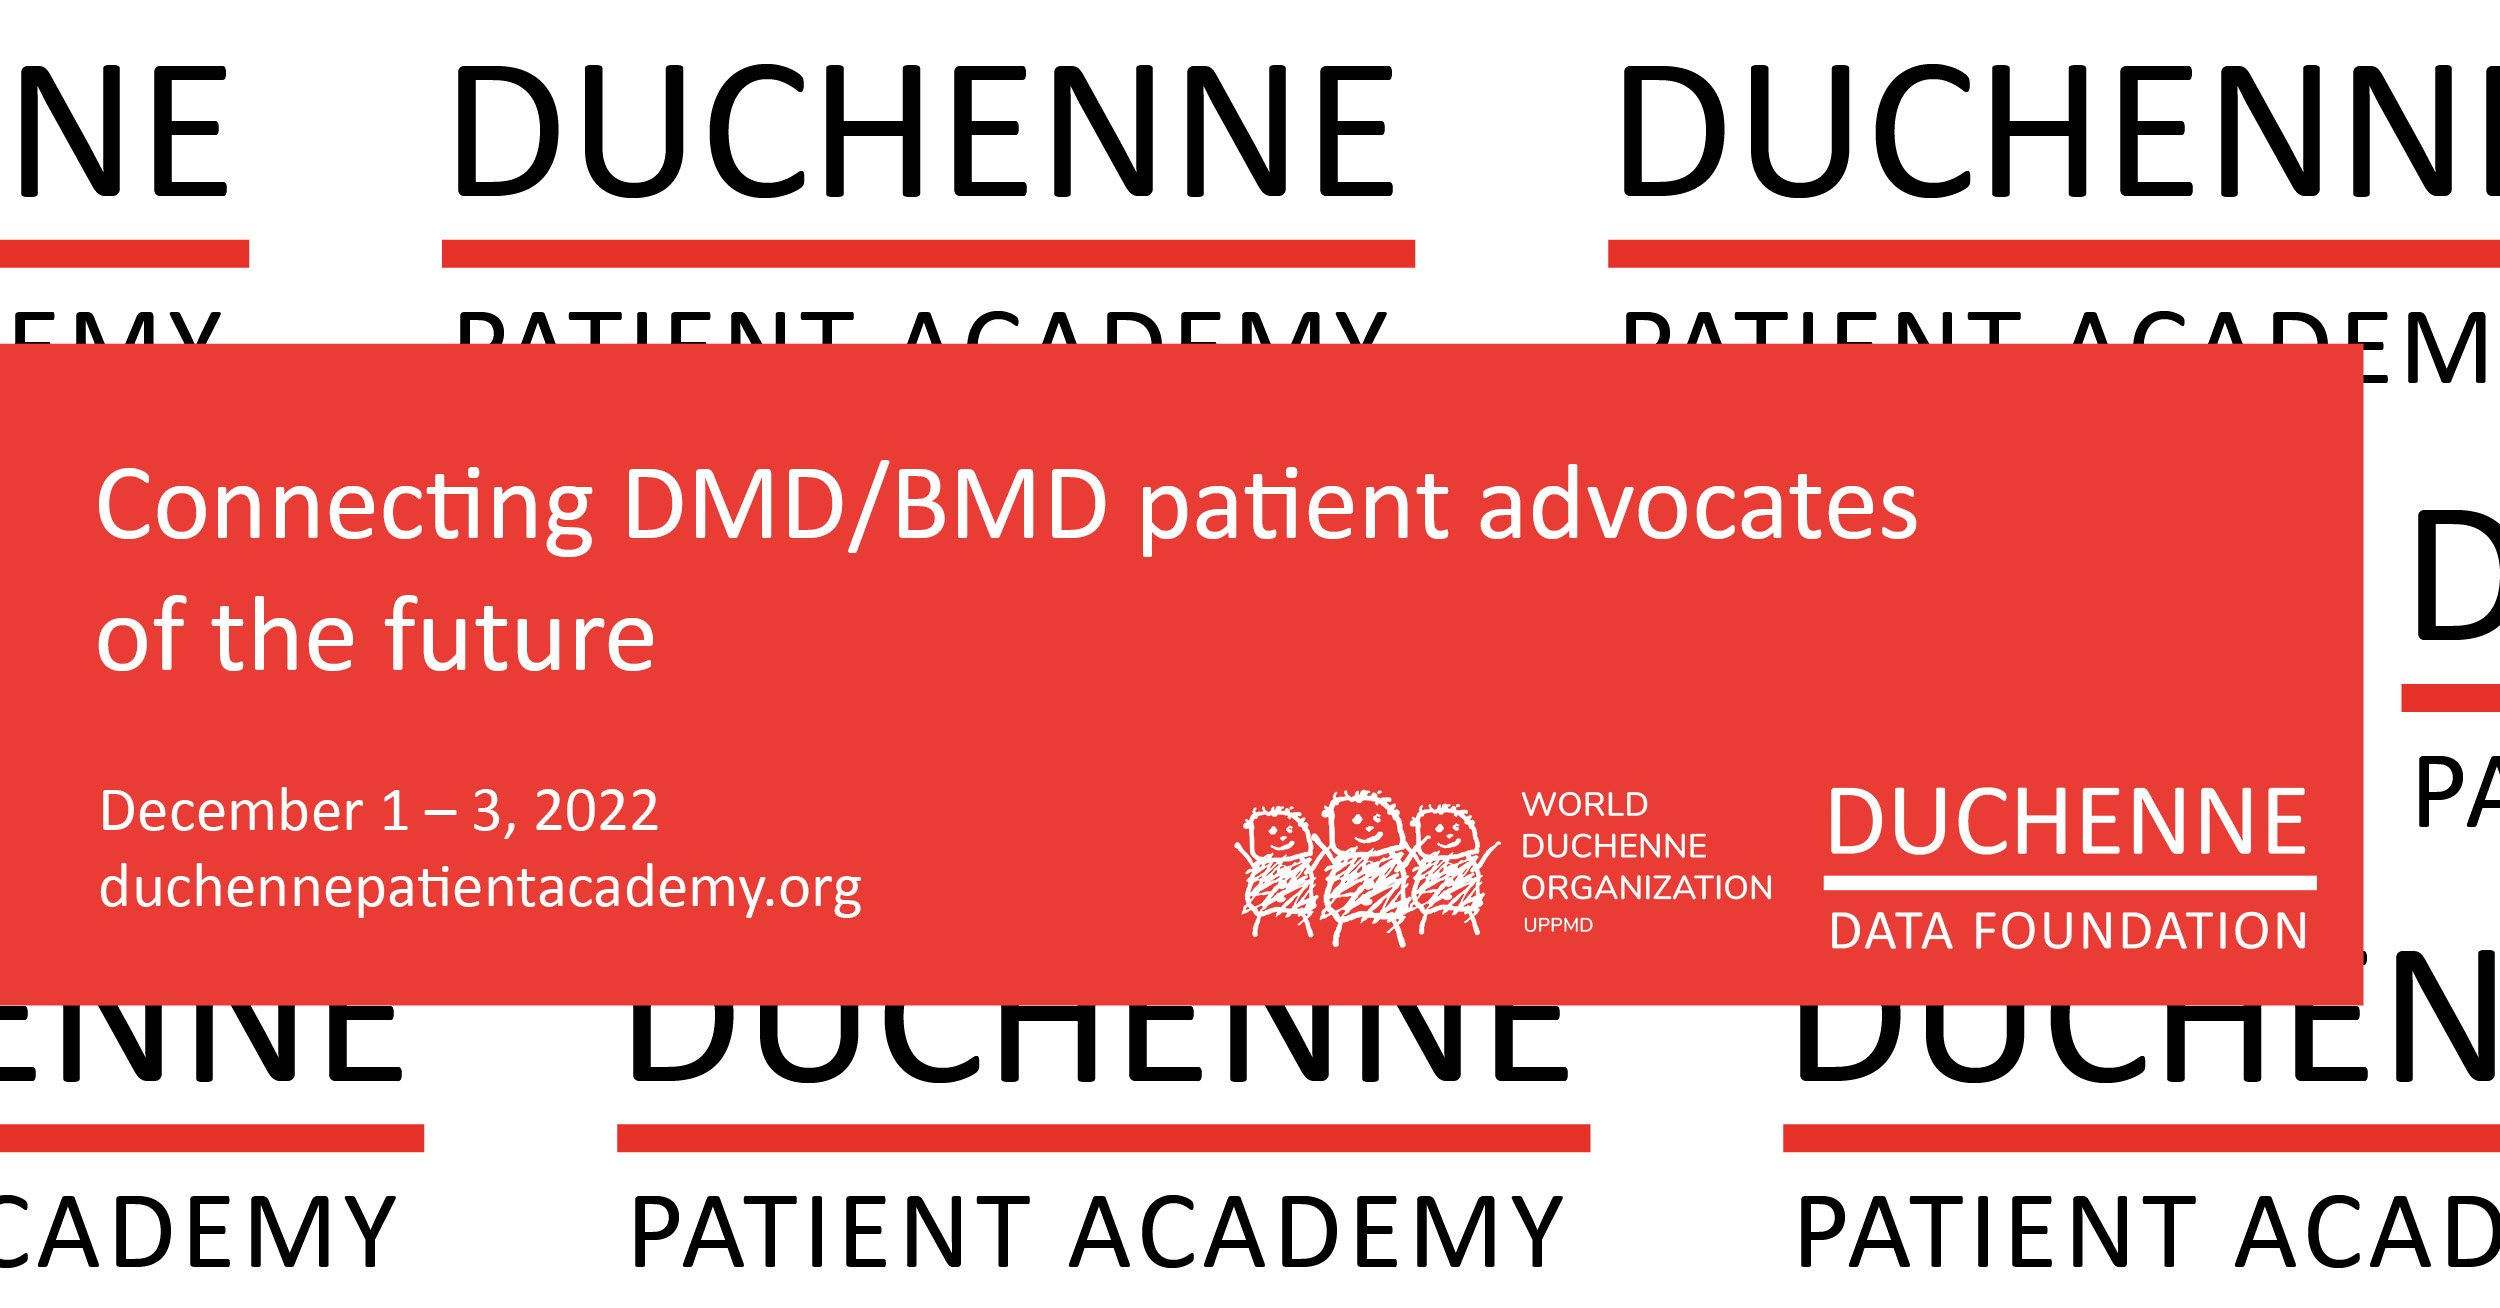 Duchenne Patient Academy 2022 Applications Now Open